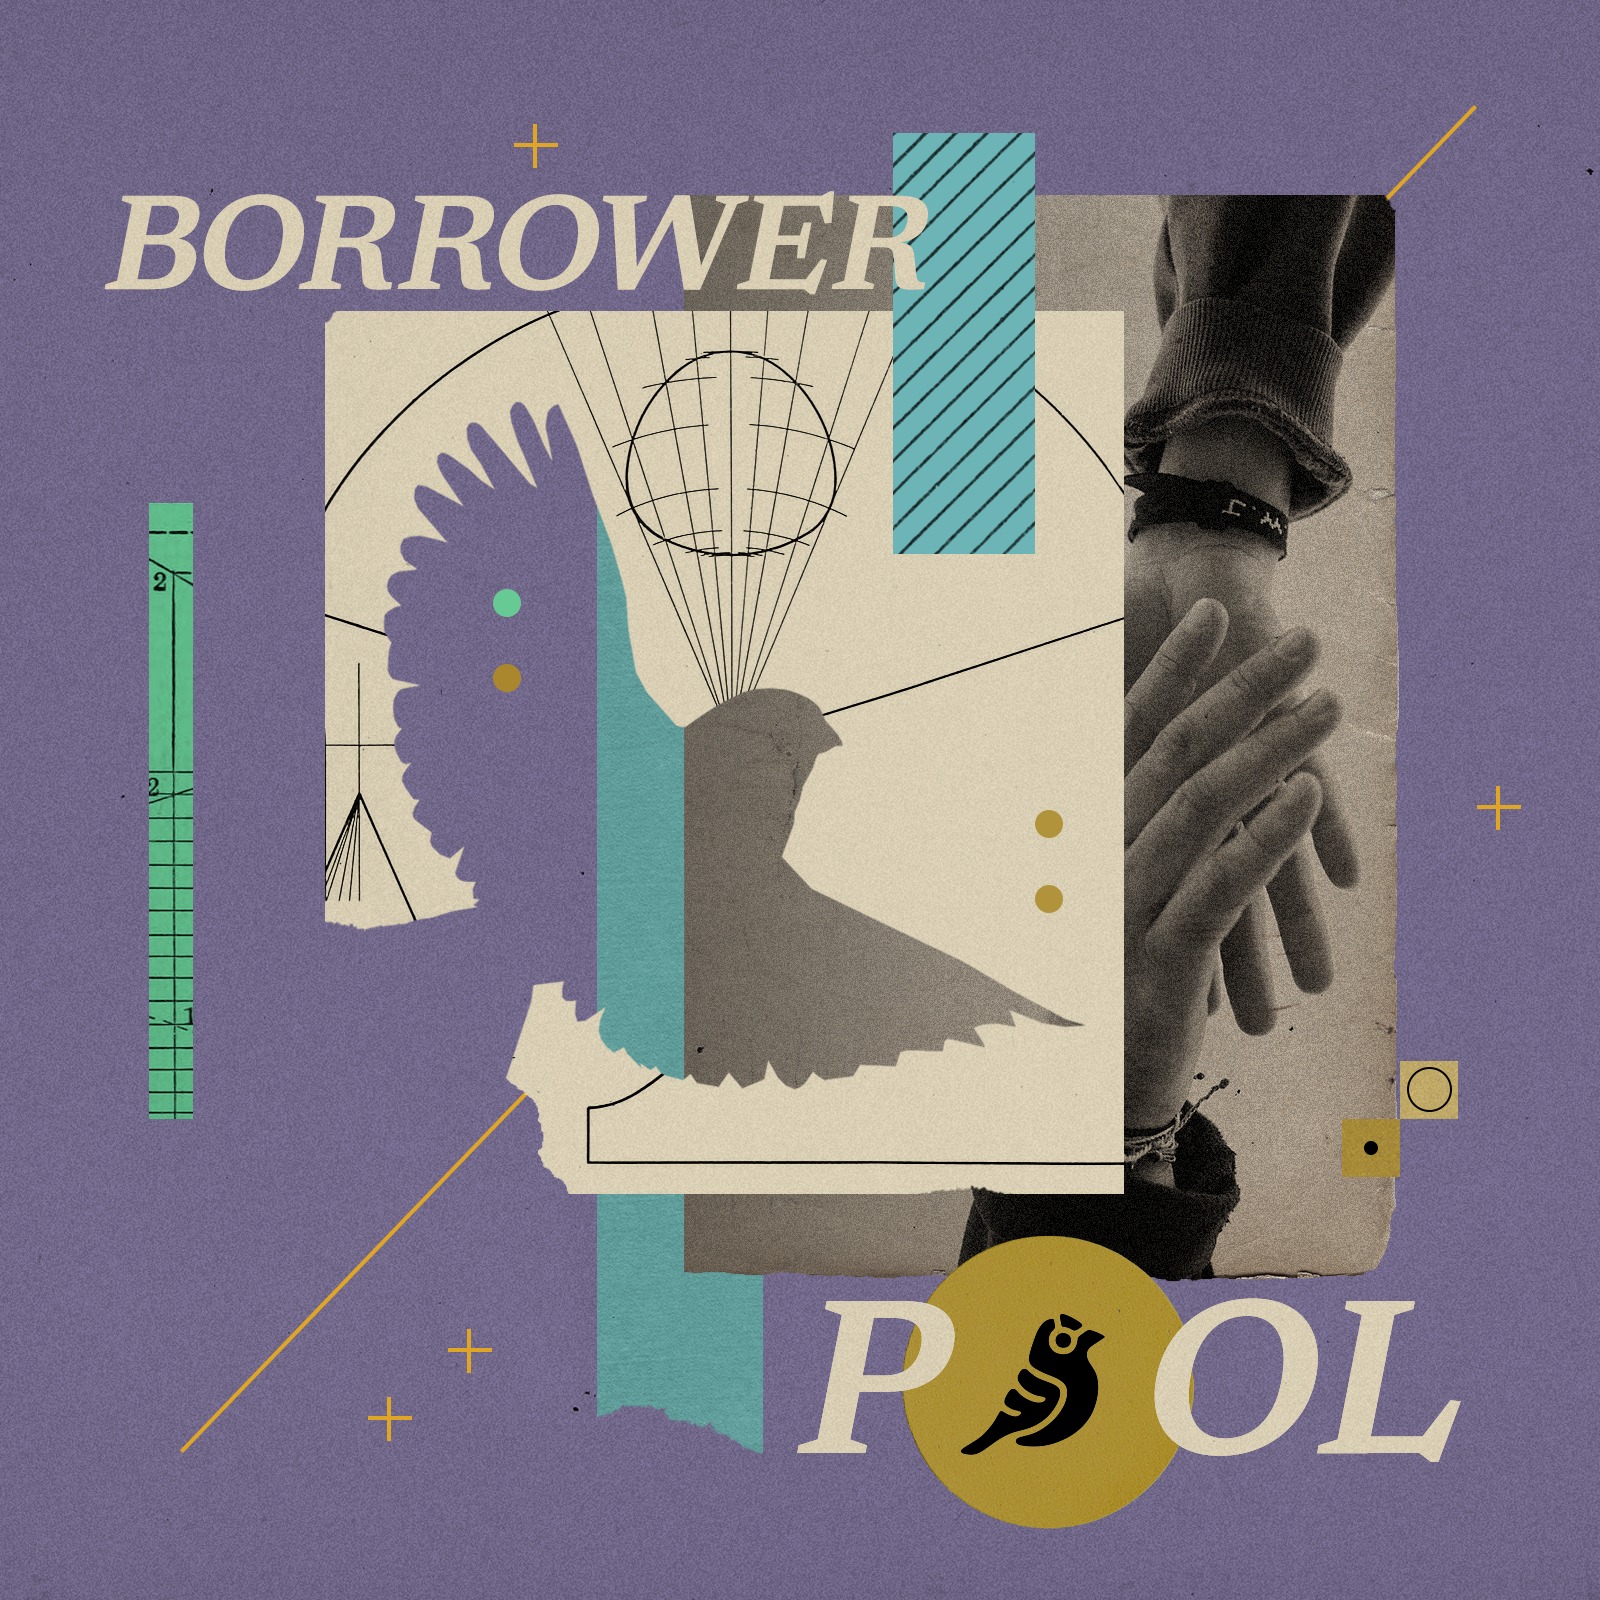 How the Borrower Pool works